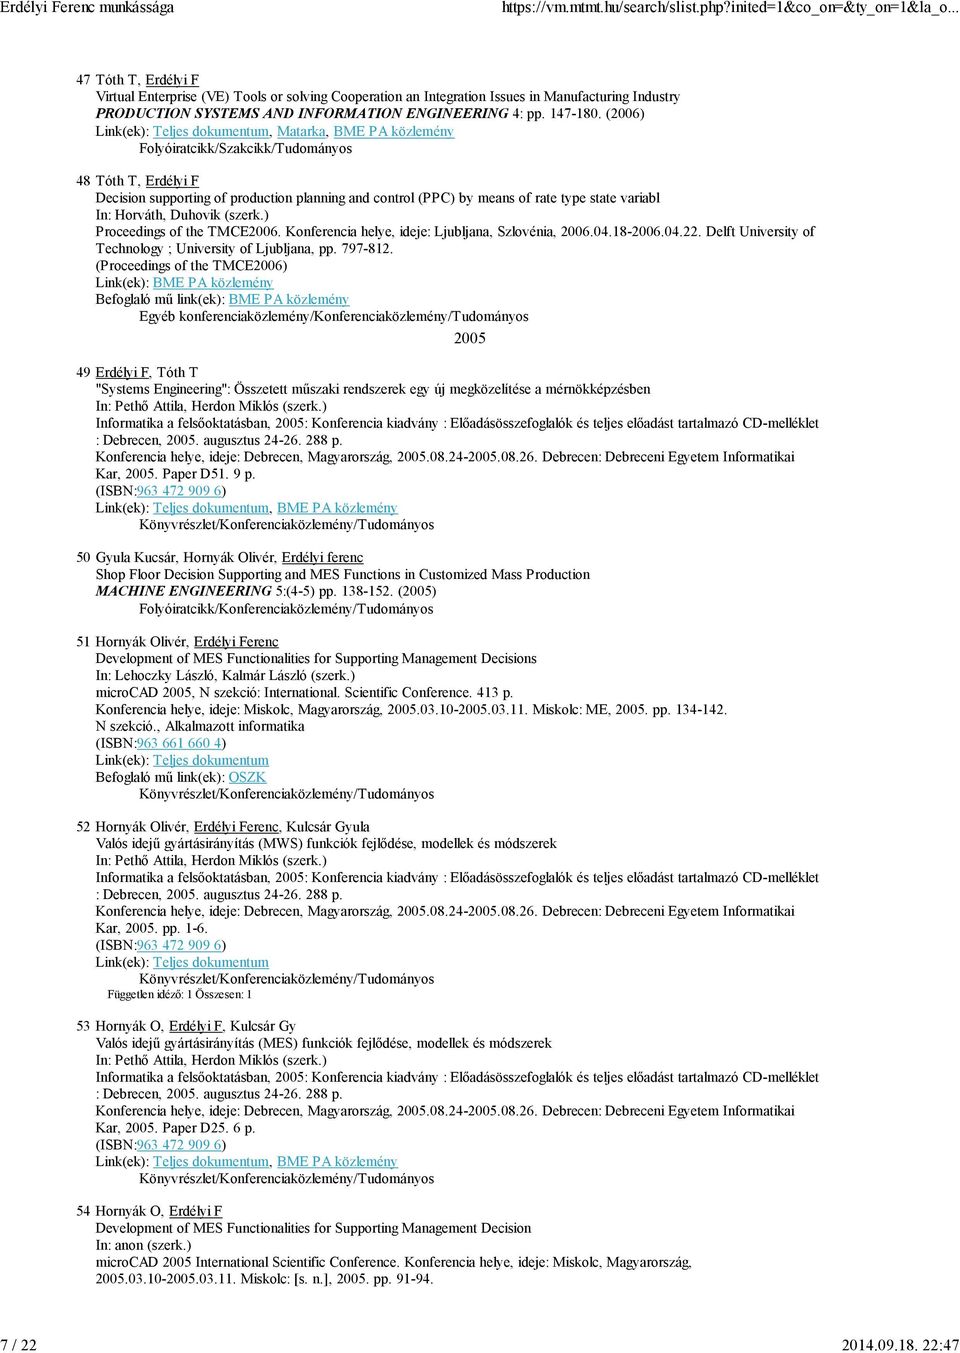 ) Proceedings of the TMCE2006. Konferencia helye, ideje: Ljubljana, Szlovénia, 2006.04.18-2006.04.22. Delft University of Technology ; University of Ljubljana, pp. 797-812.